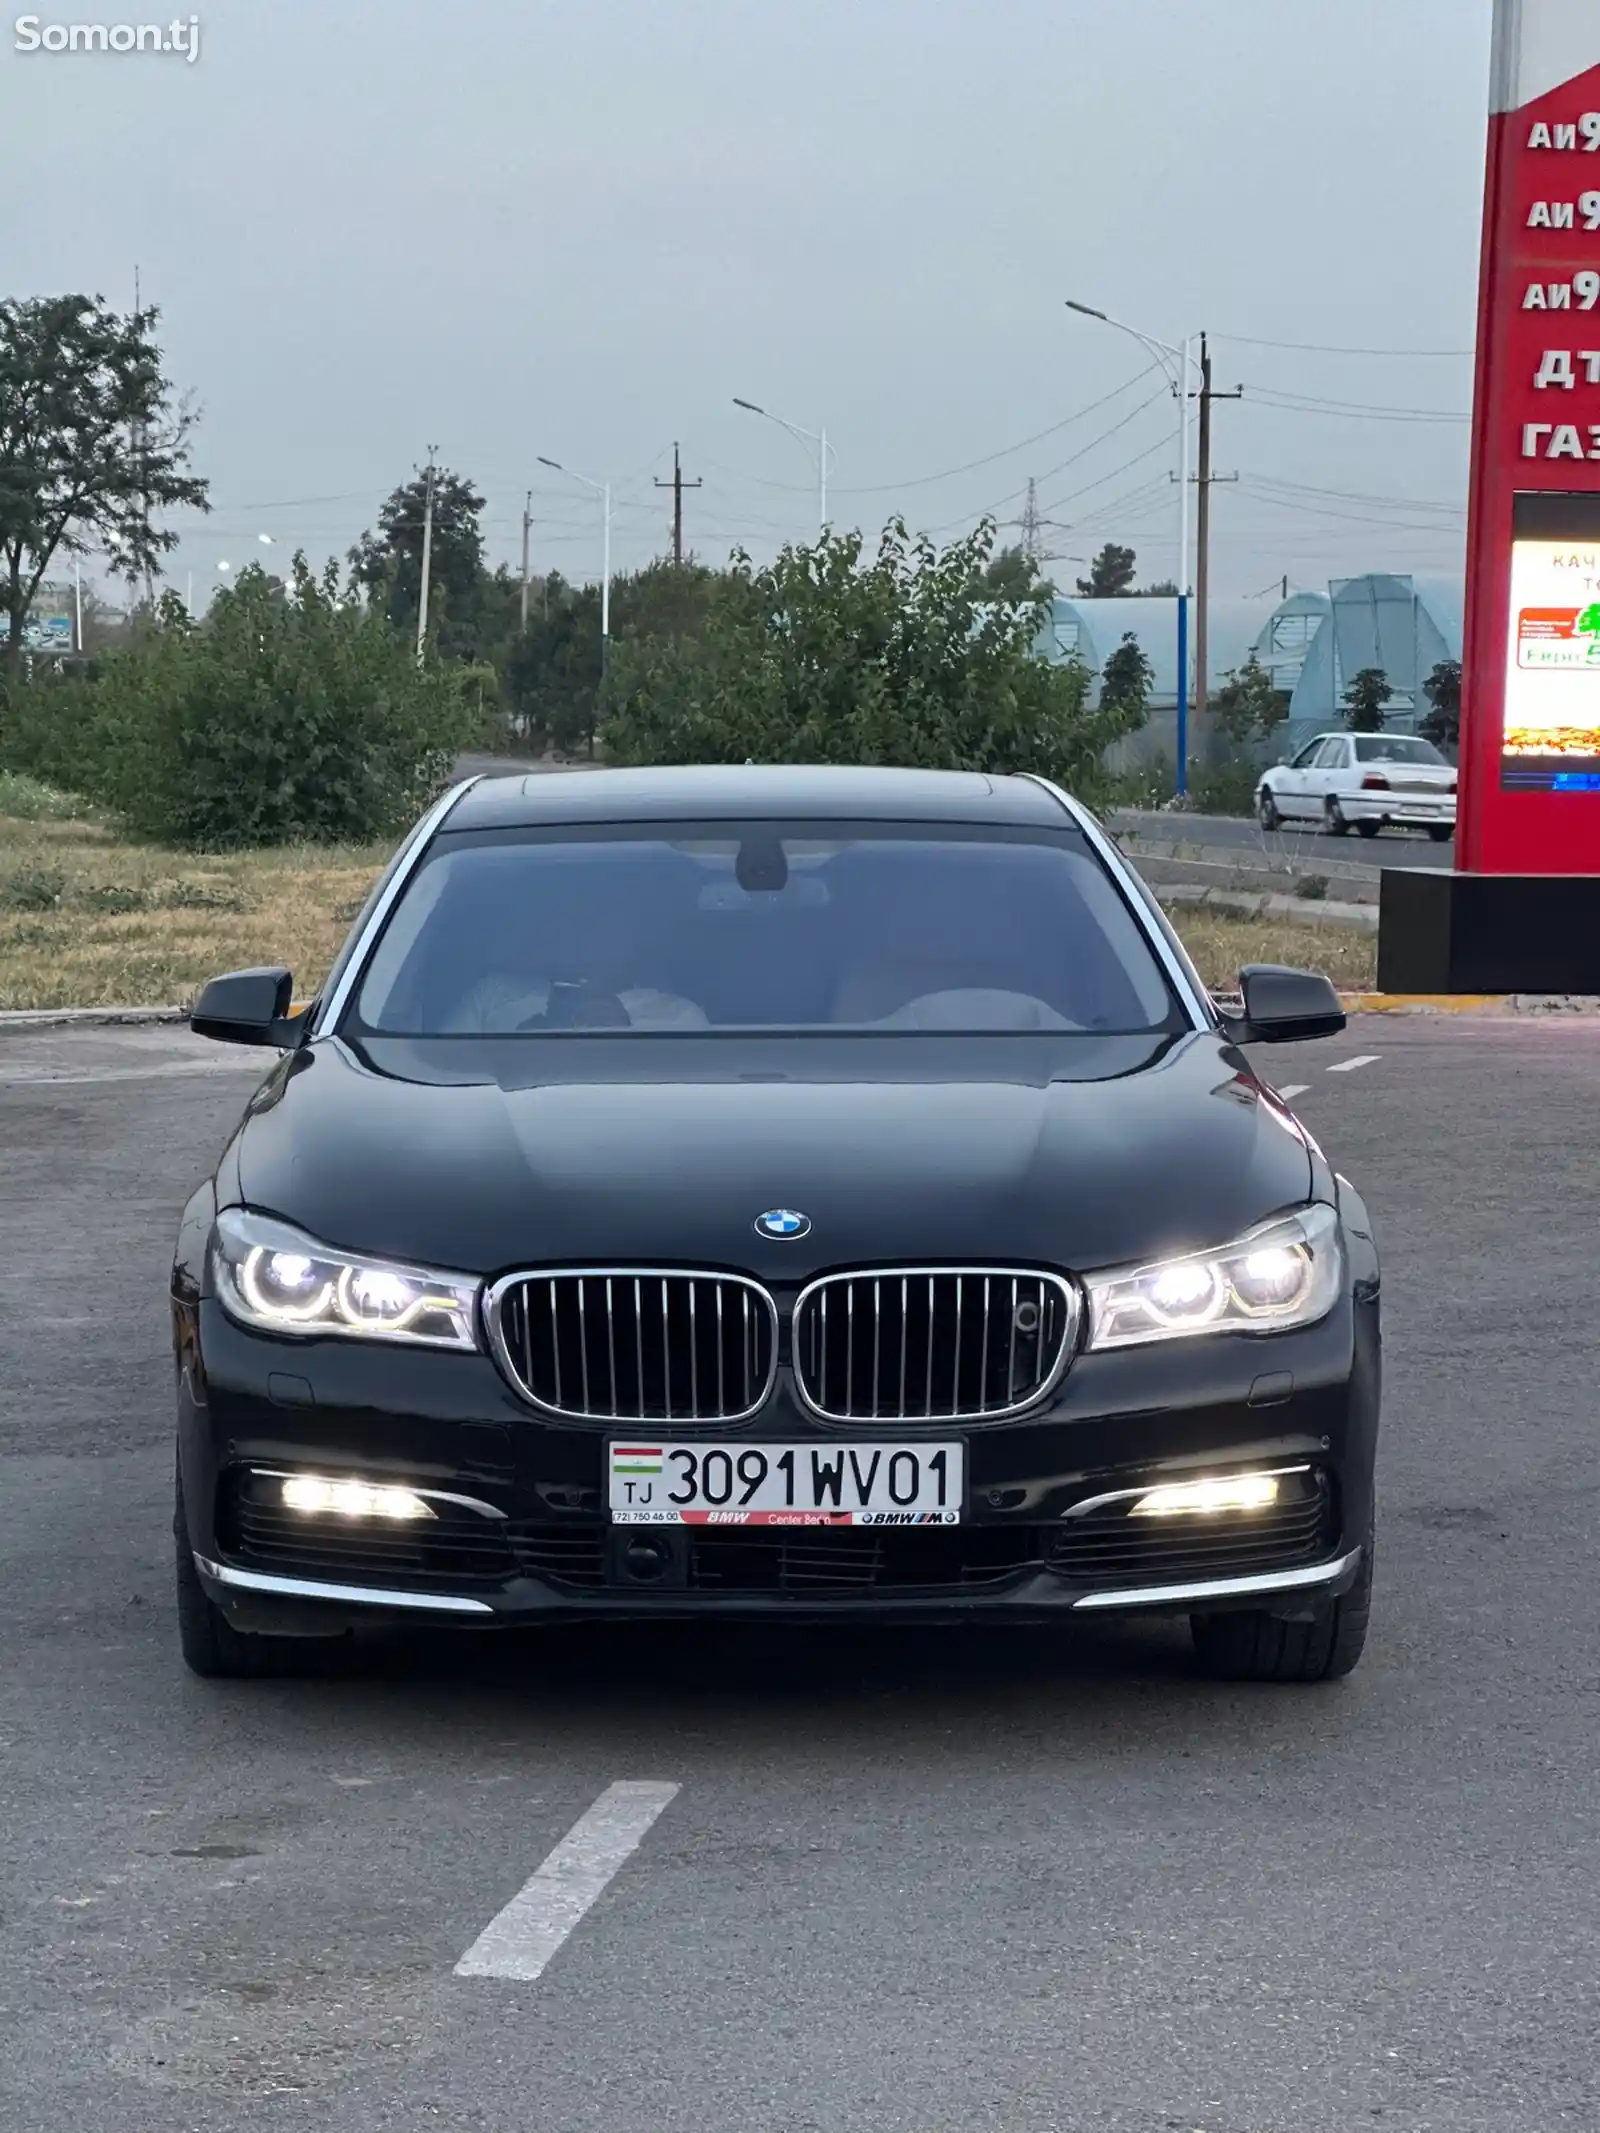 BMW 7 series, 2012-2